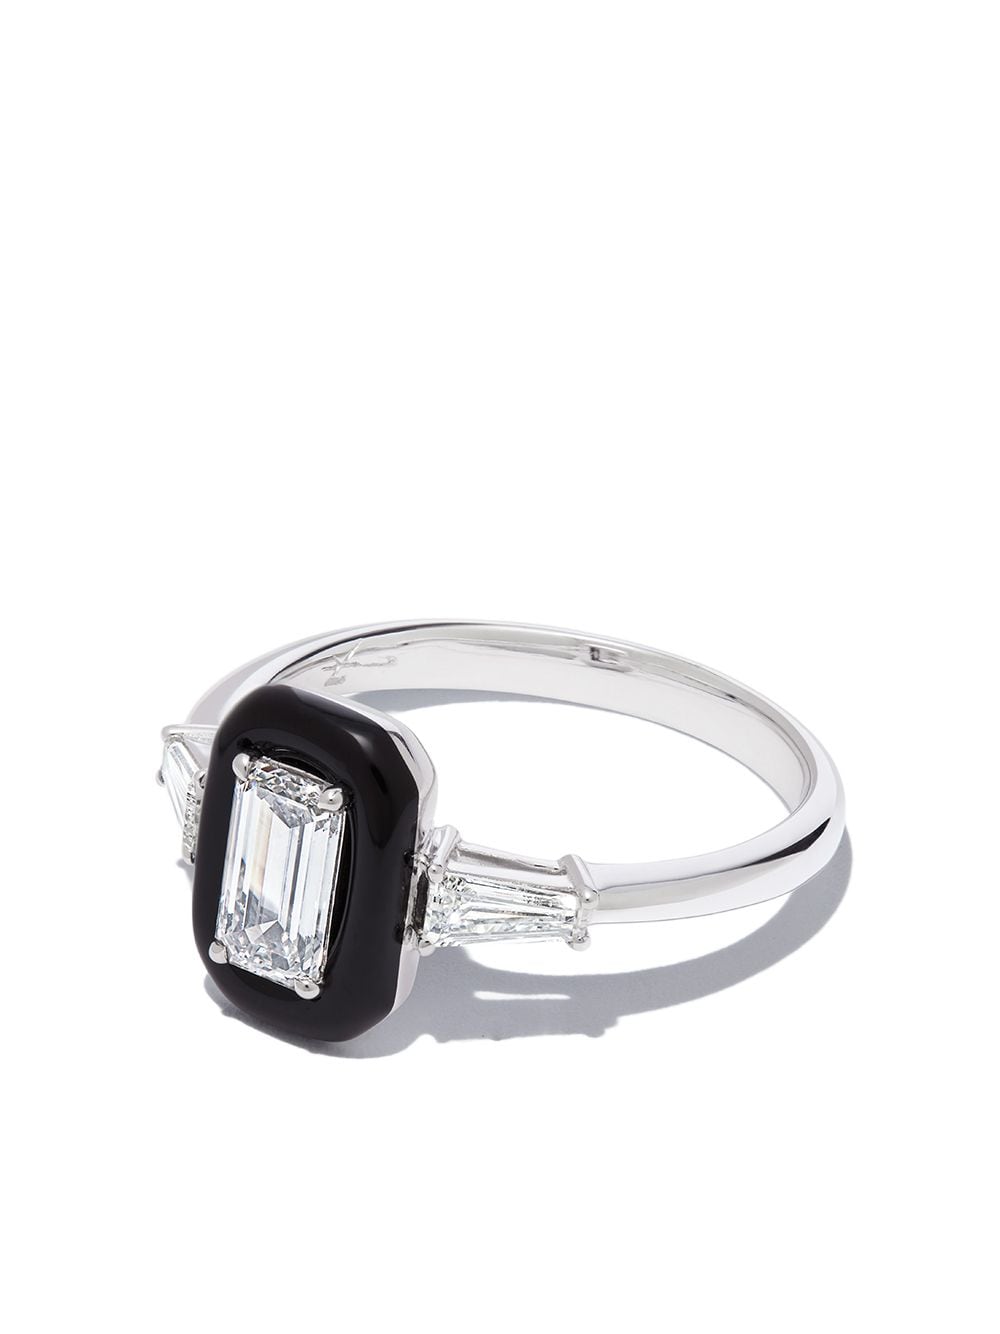 18kt white gold diamond and enamel ring